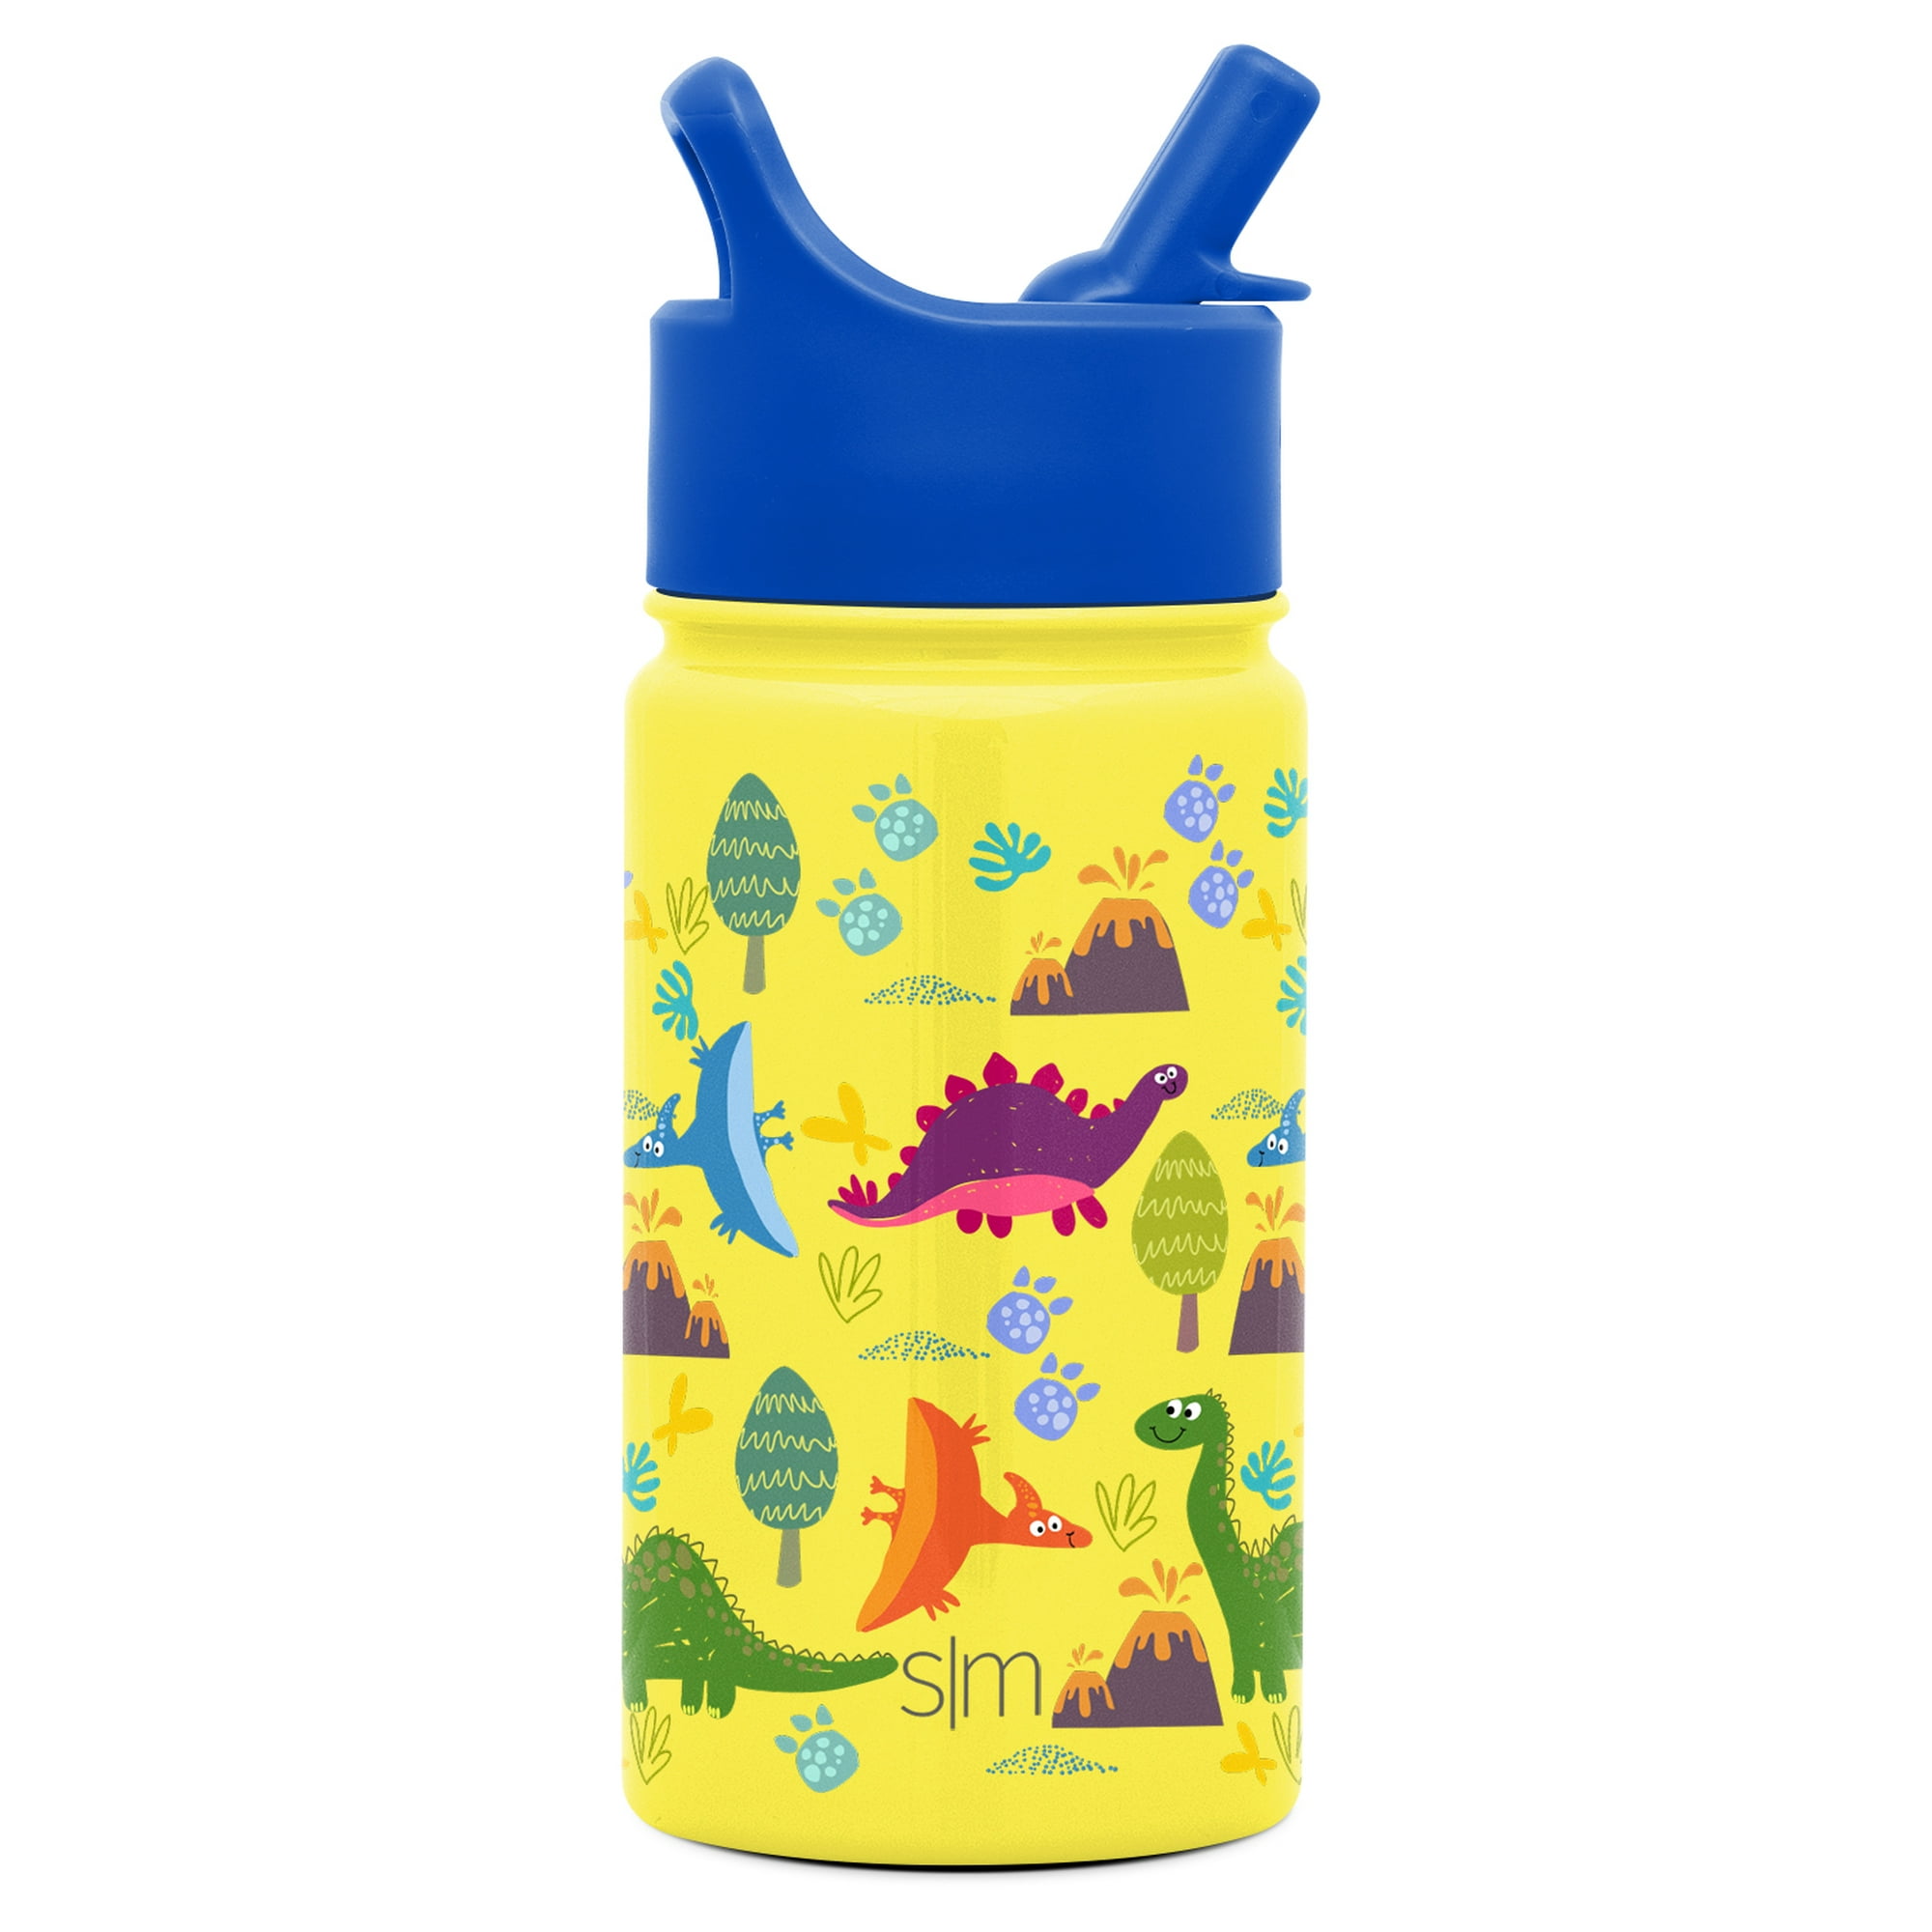 Reusable water bottles for kids - Little Summit